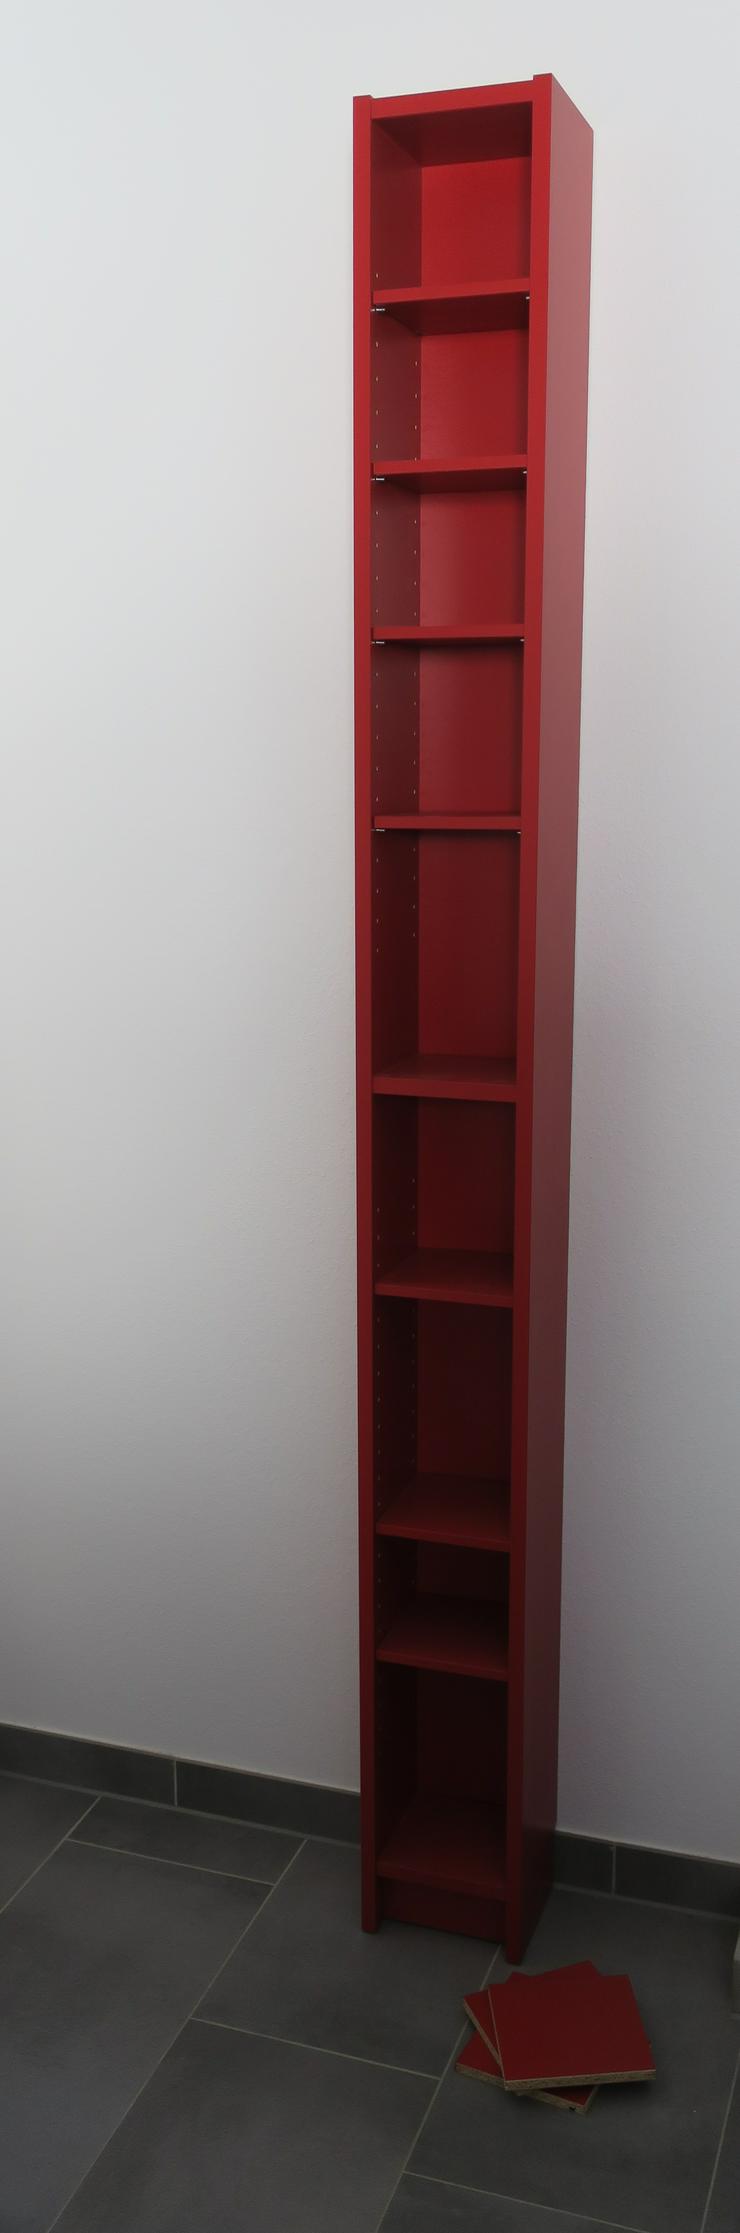 Bild 1: Ikea CD/DVD-Regal in rot